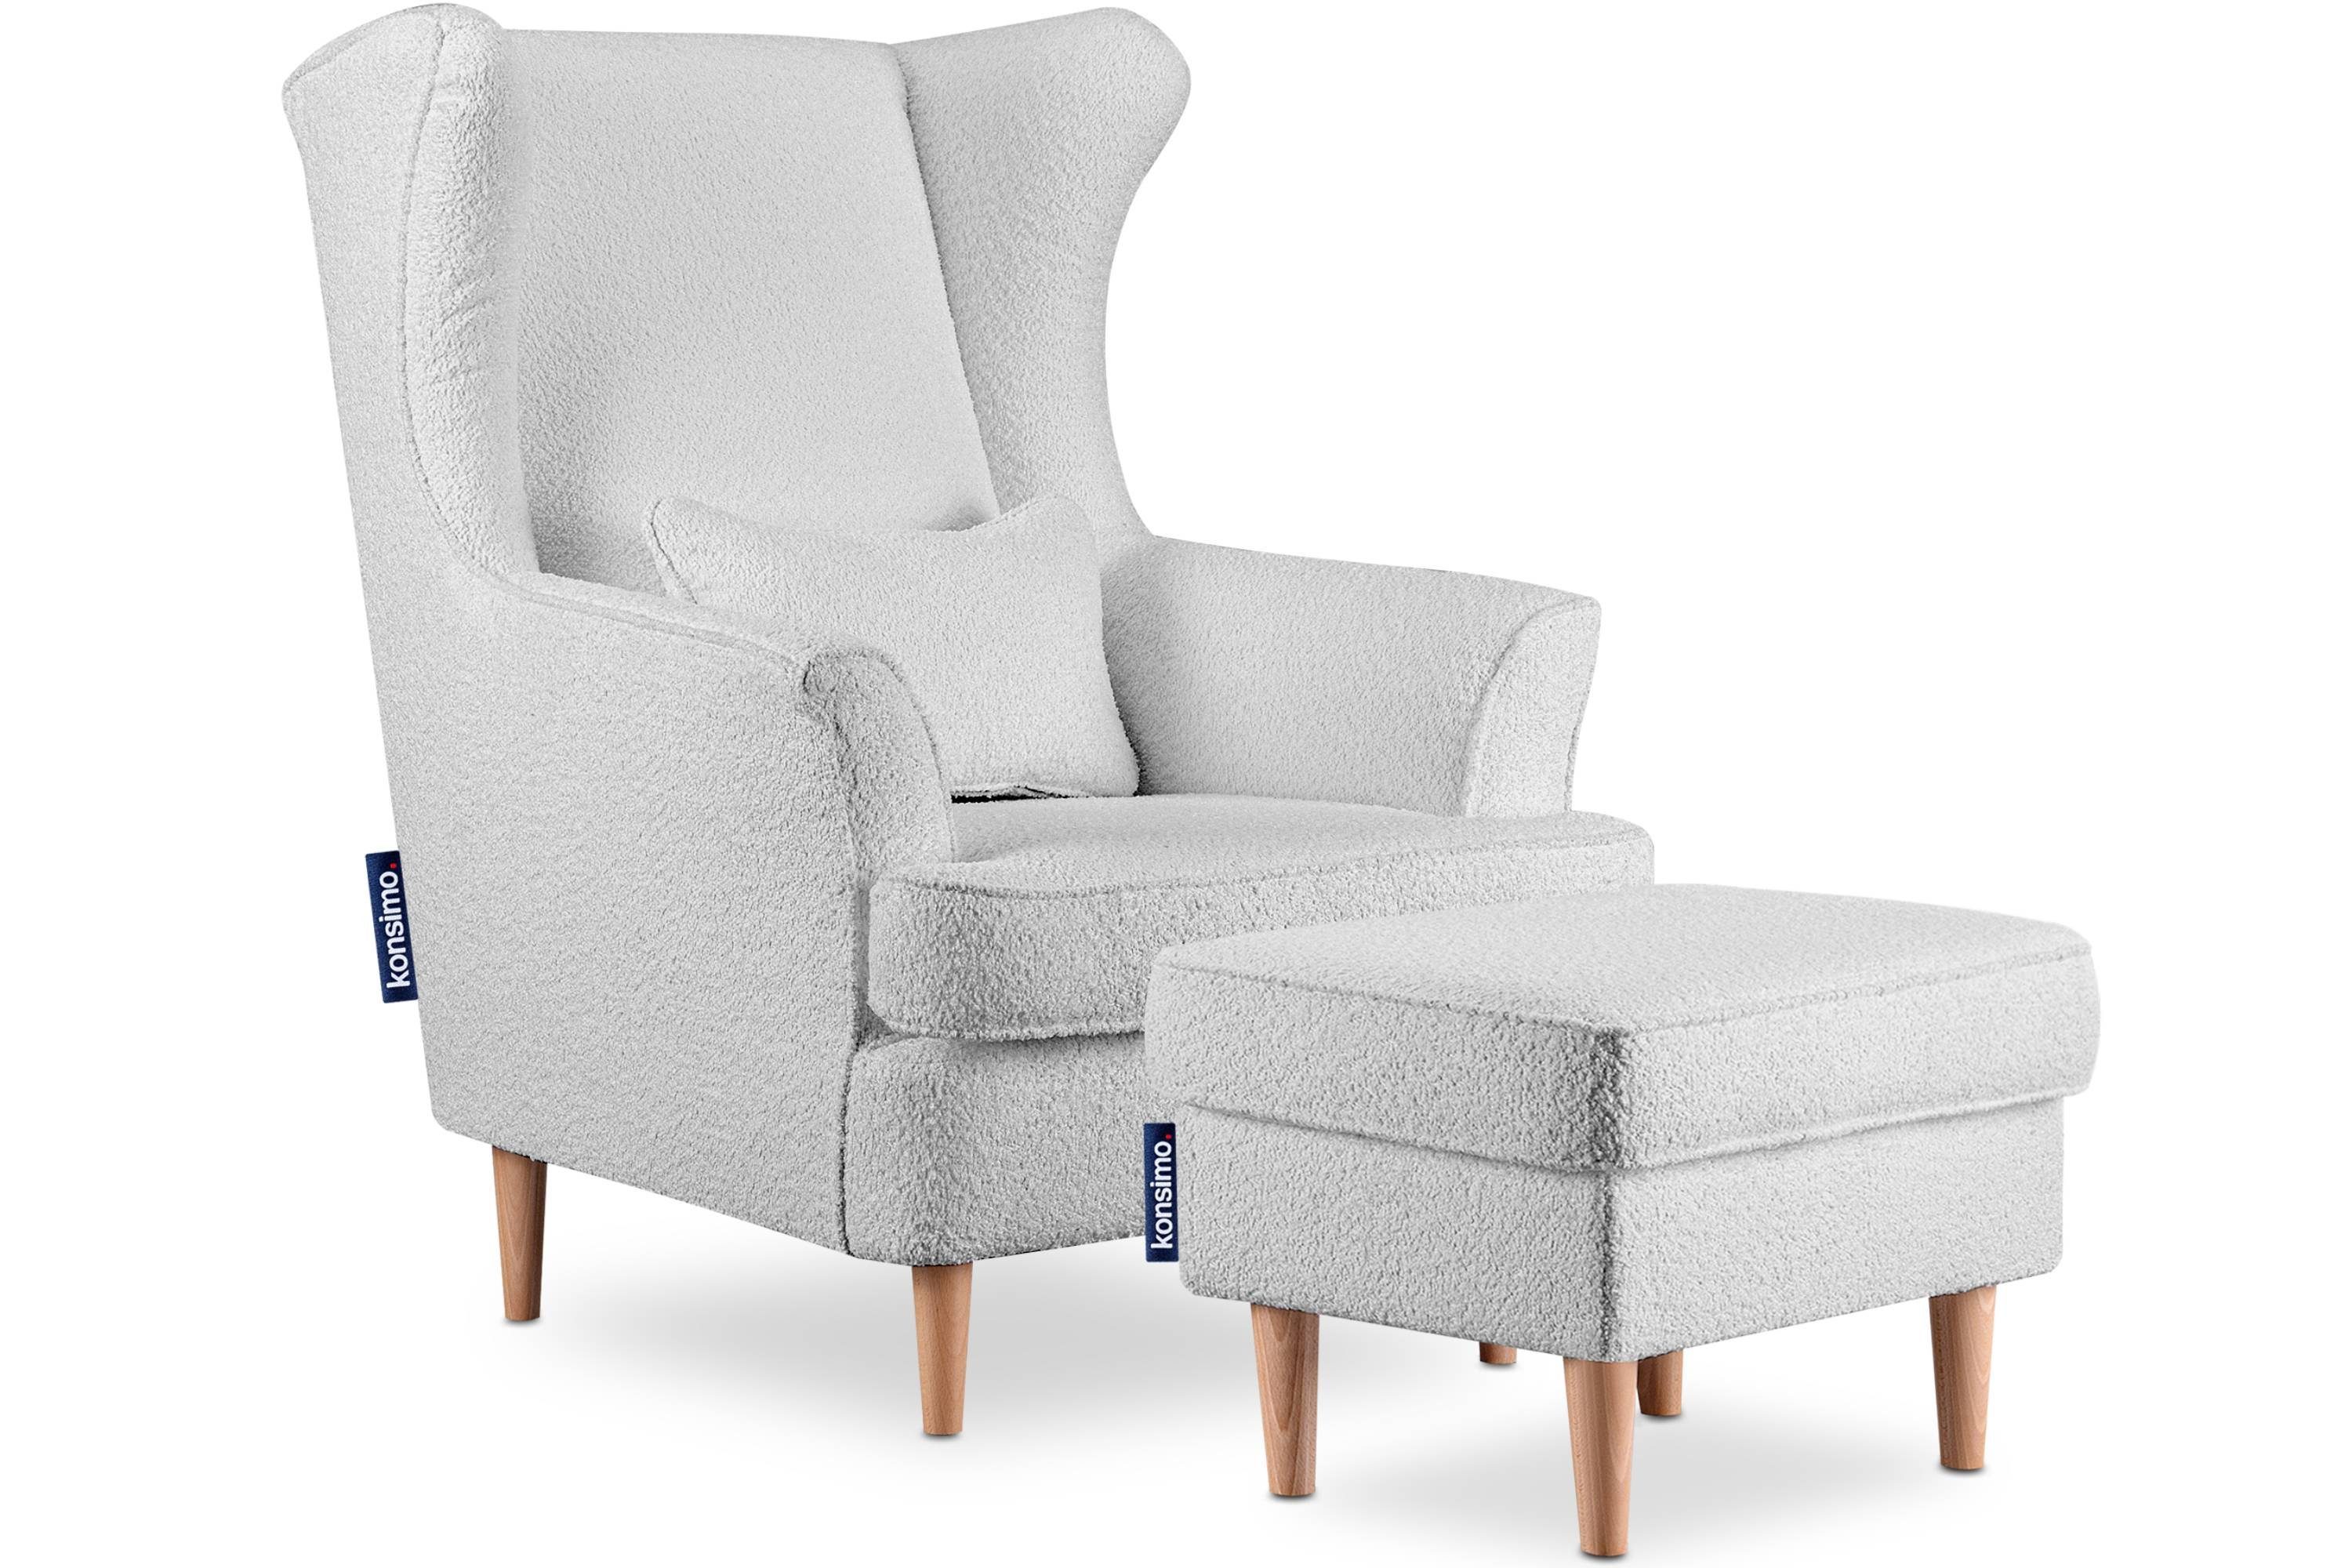 Hocker, STRALIS zeitloses Sessel mit Kissen Konsimo Füße, Ohrensessel dekorativem hohe Design, inklusive